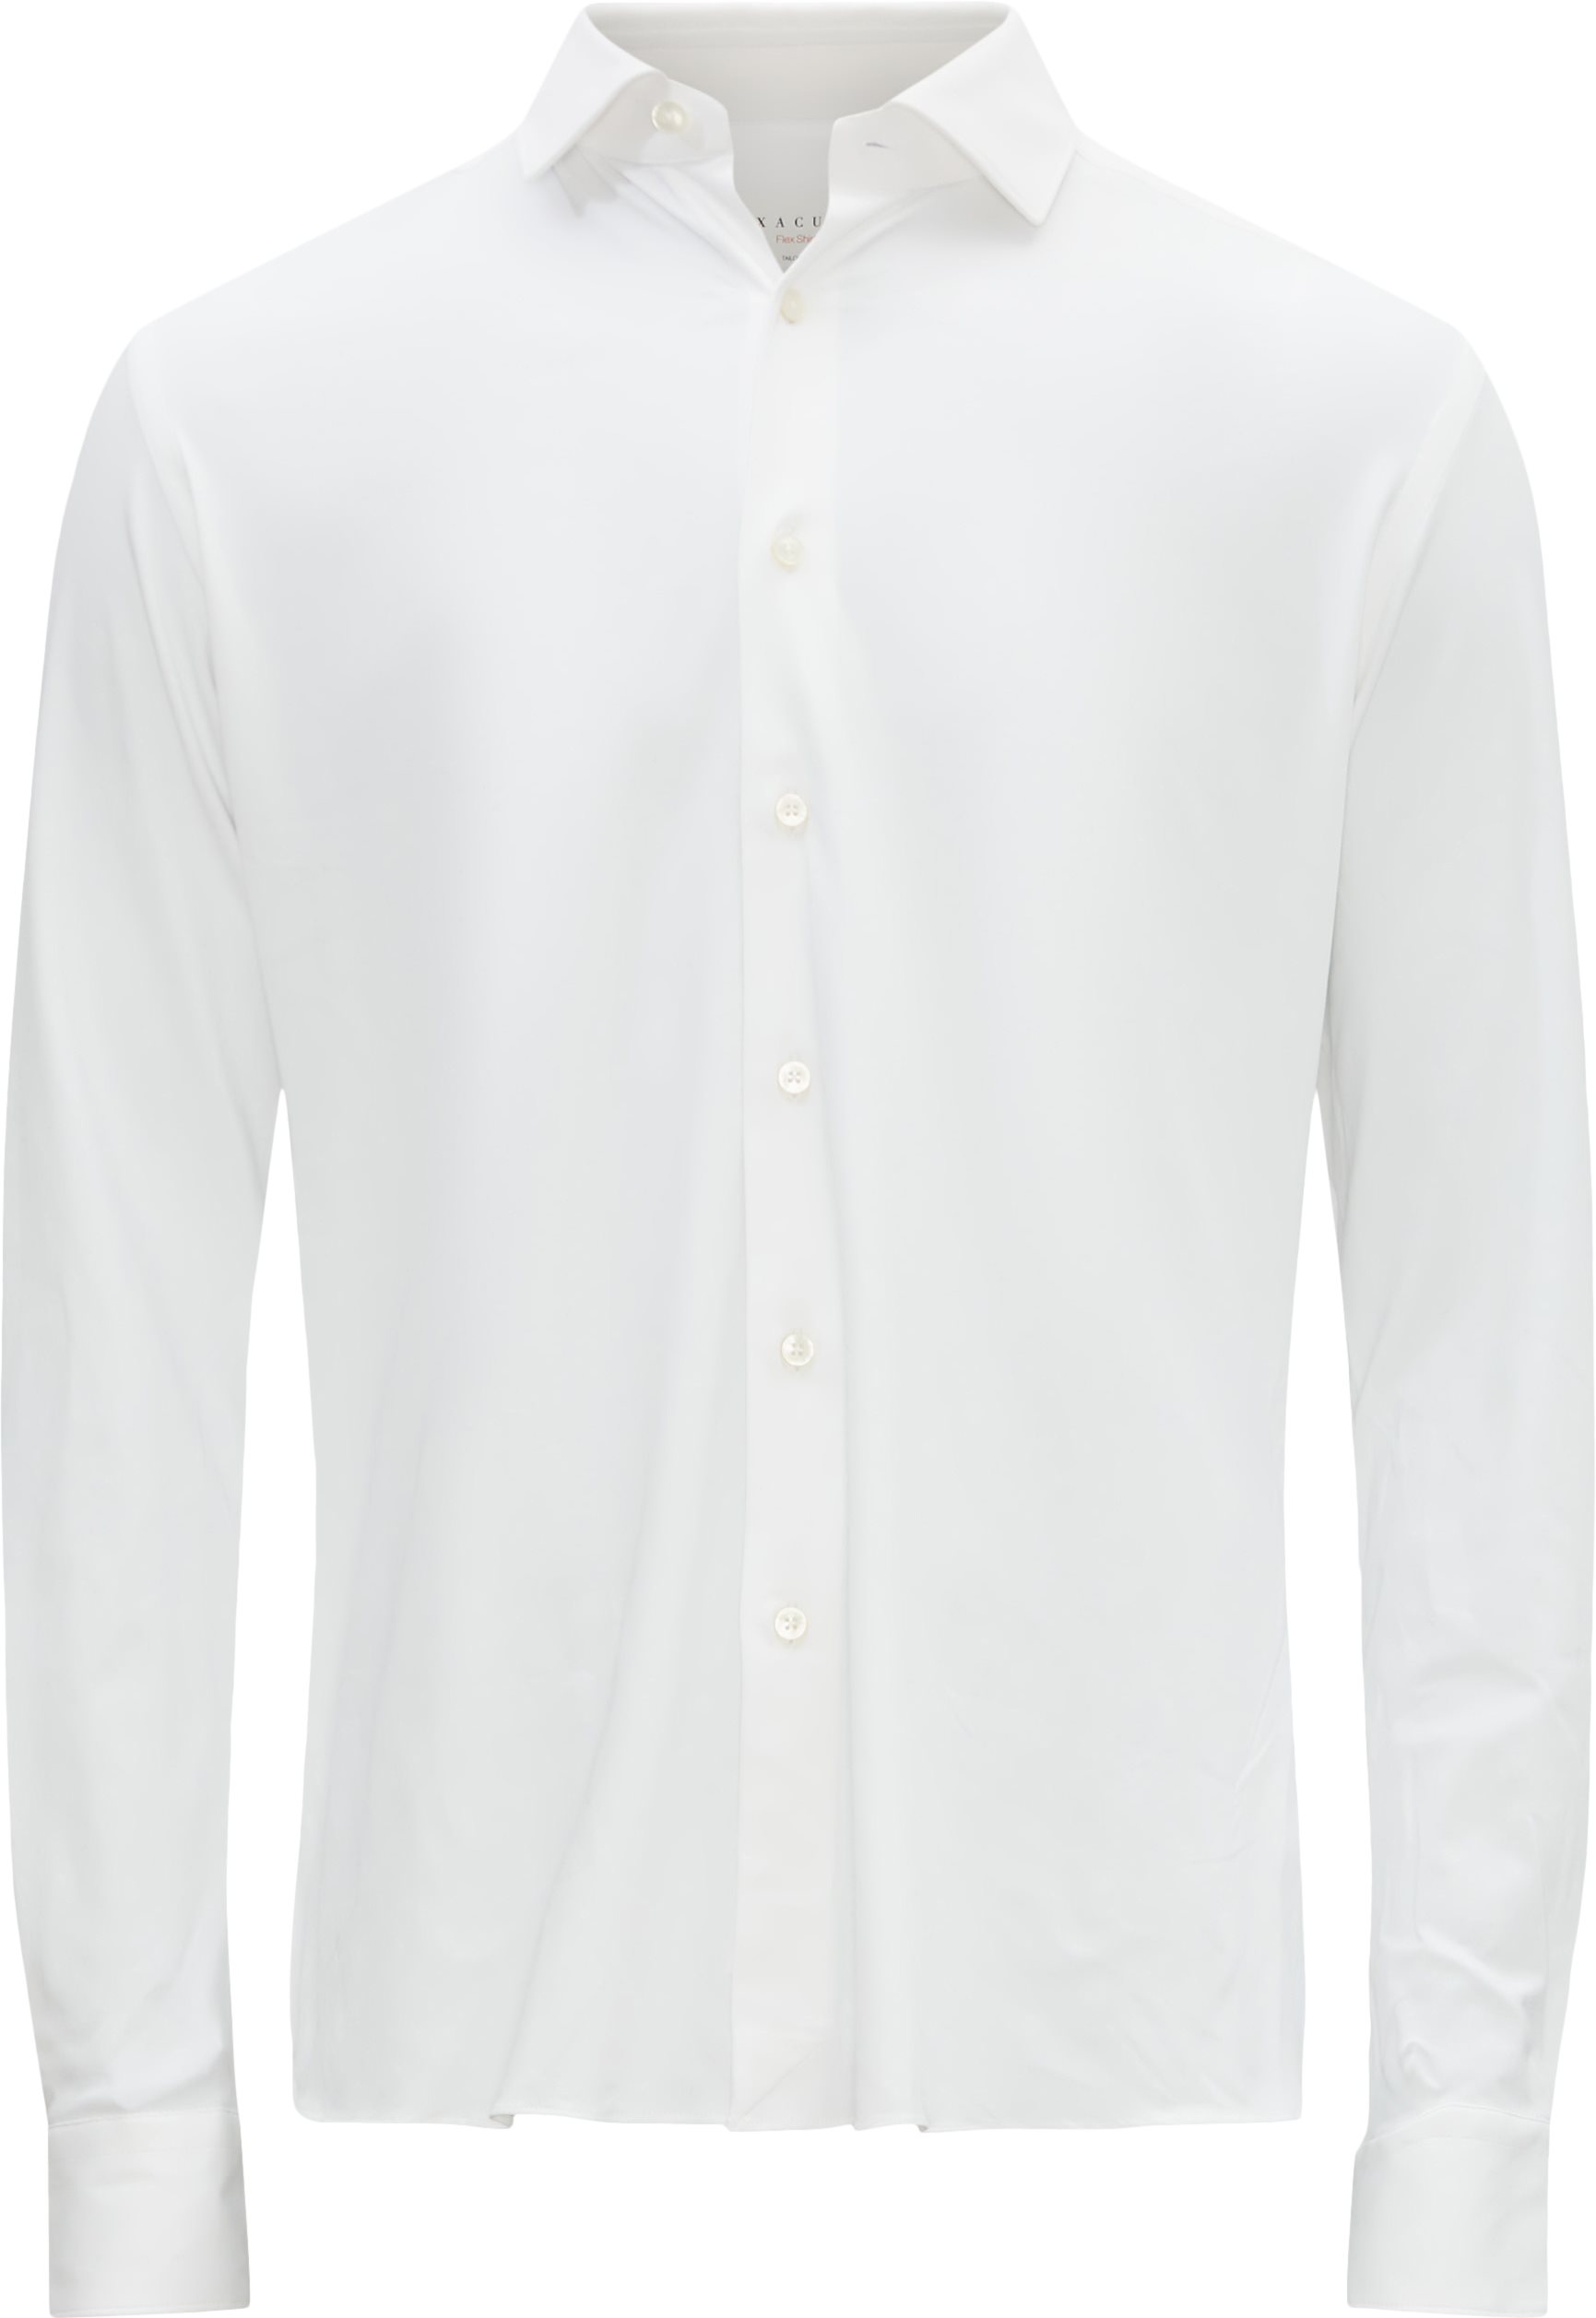 Xacus Shirts 41643 558 White